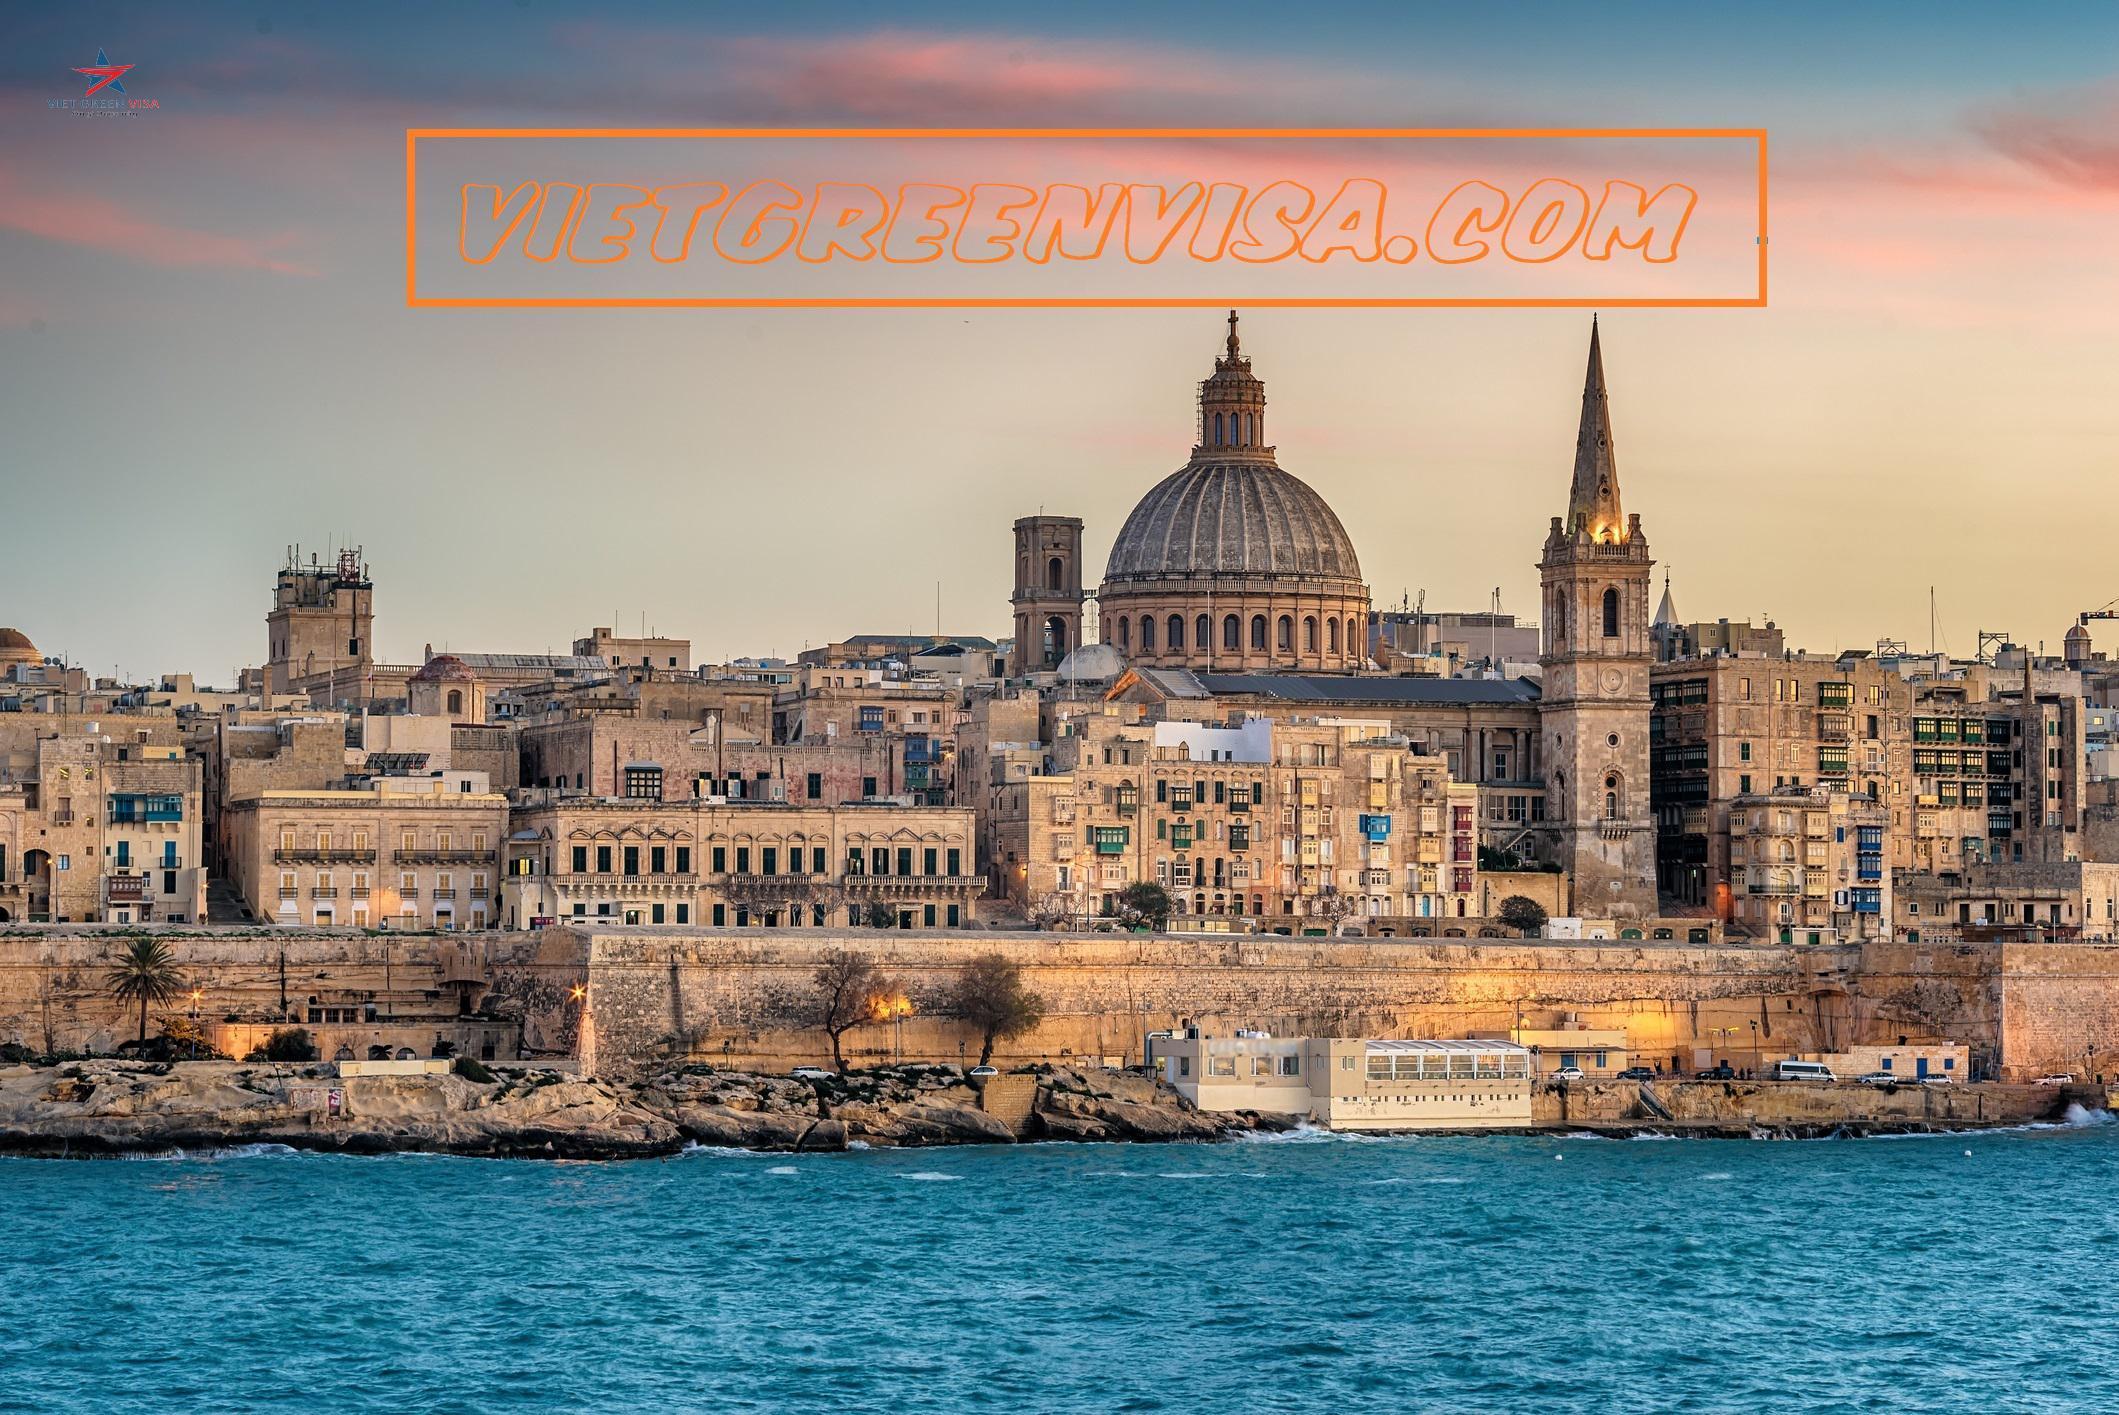 Kinh nghiệm xin Visa du lịch Malta từ A-Z